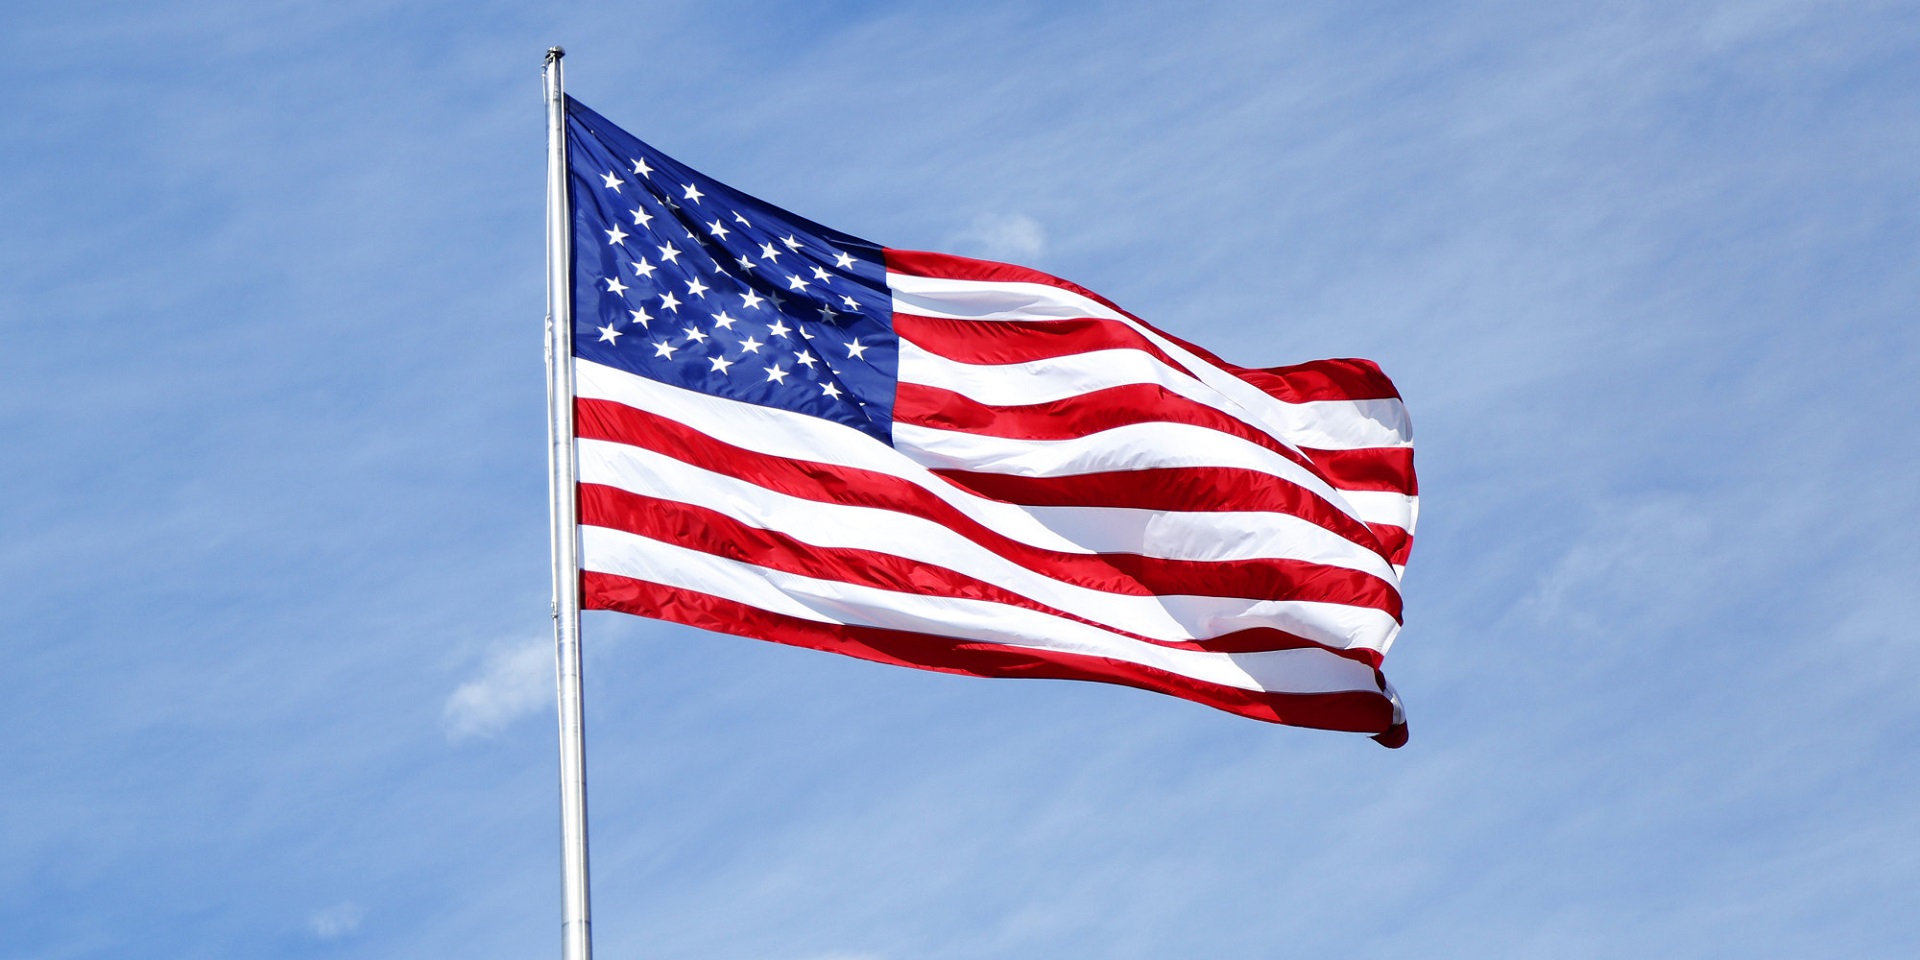 waving american flag images 2017